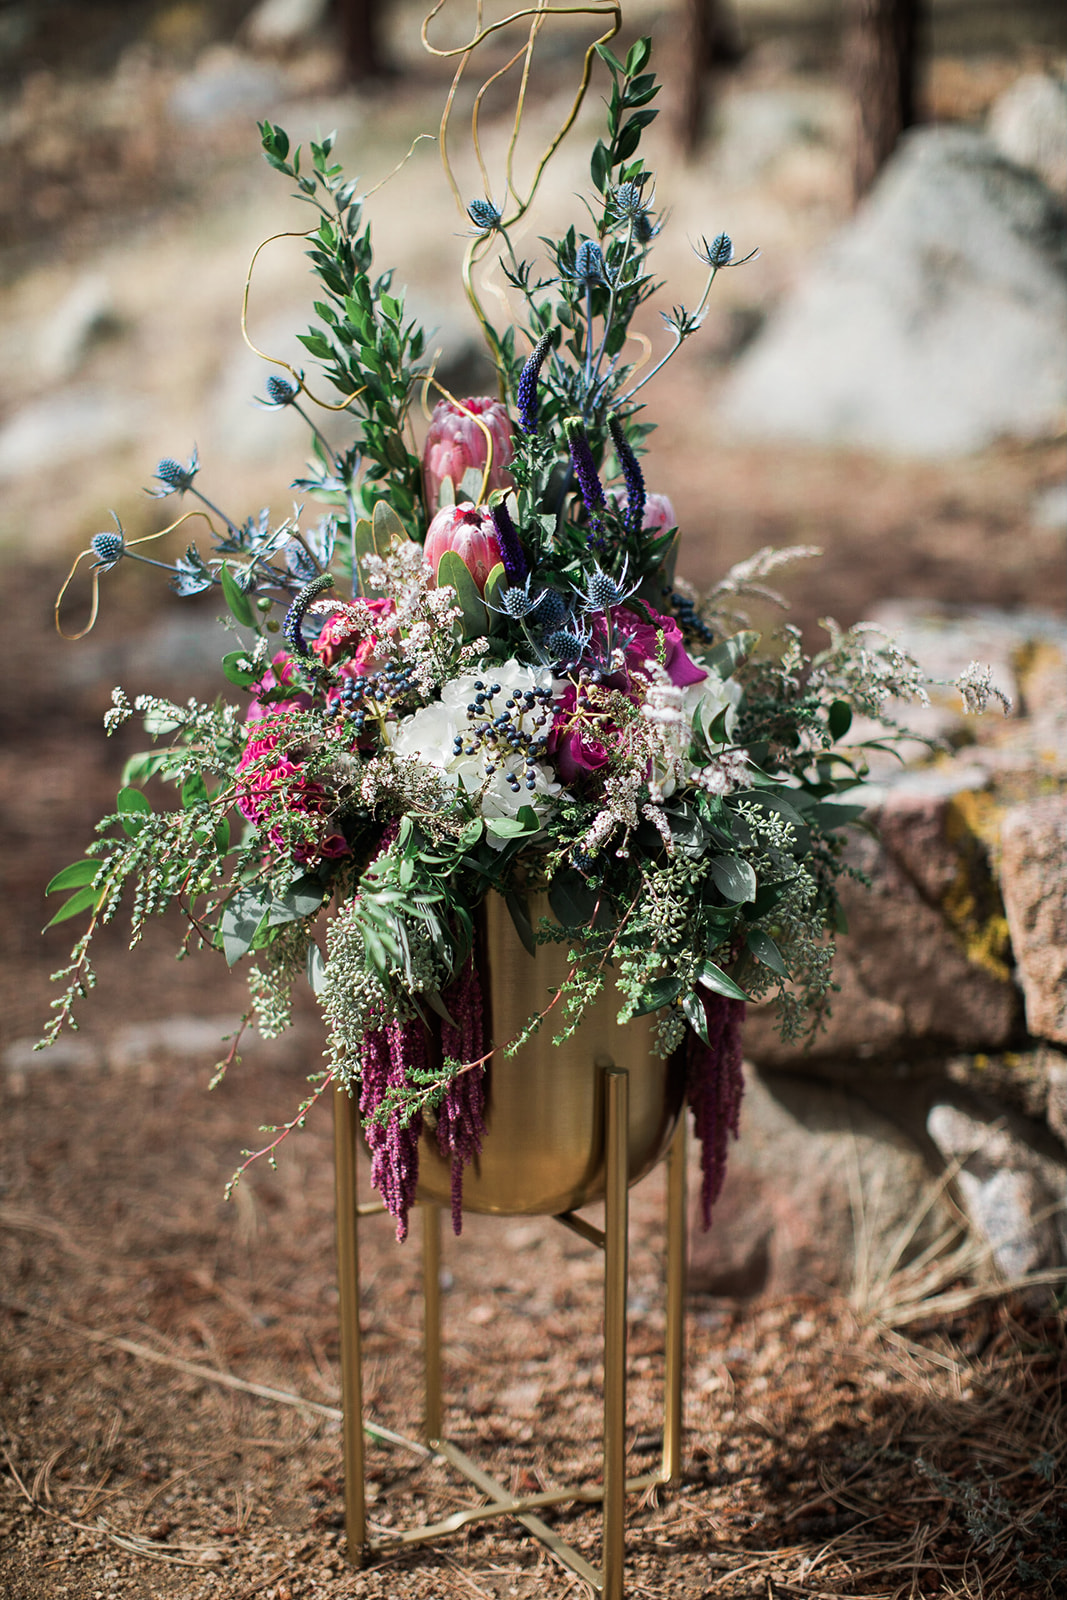 flowers decorating rocky mountain national park elopement ceremony ampitheatre